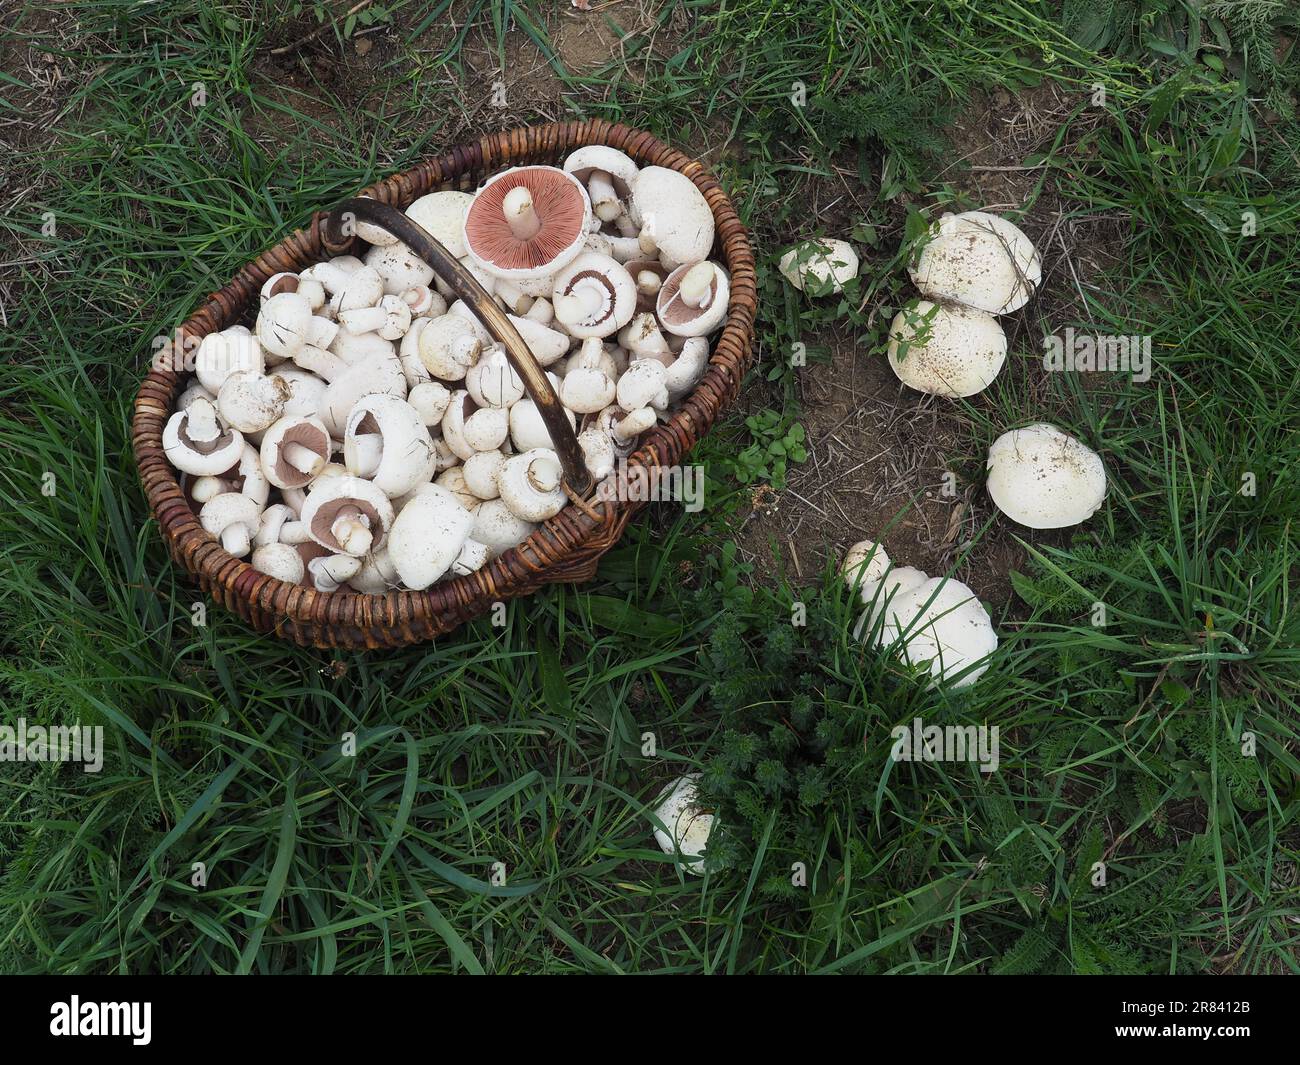 Mushroom basket with meadow mushrooms, mushroom of the year 2018 Stock Photo